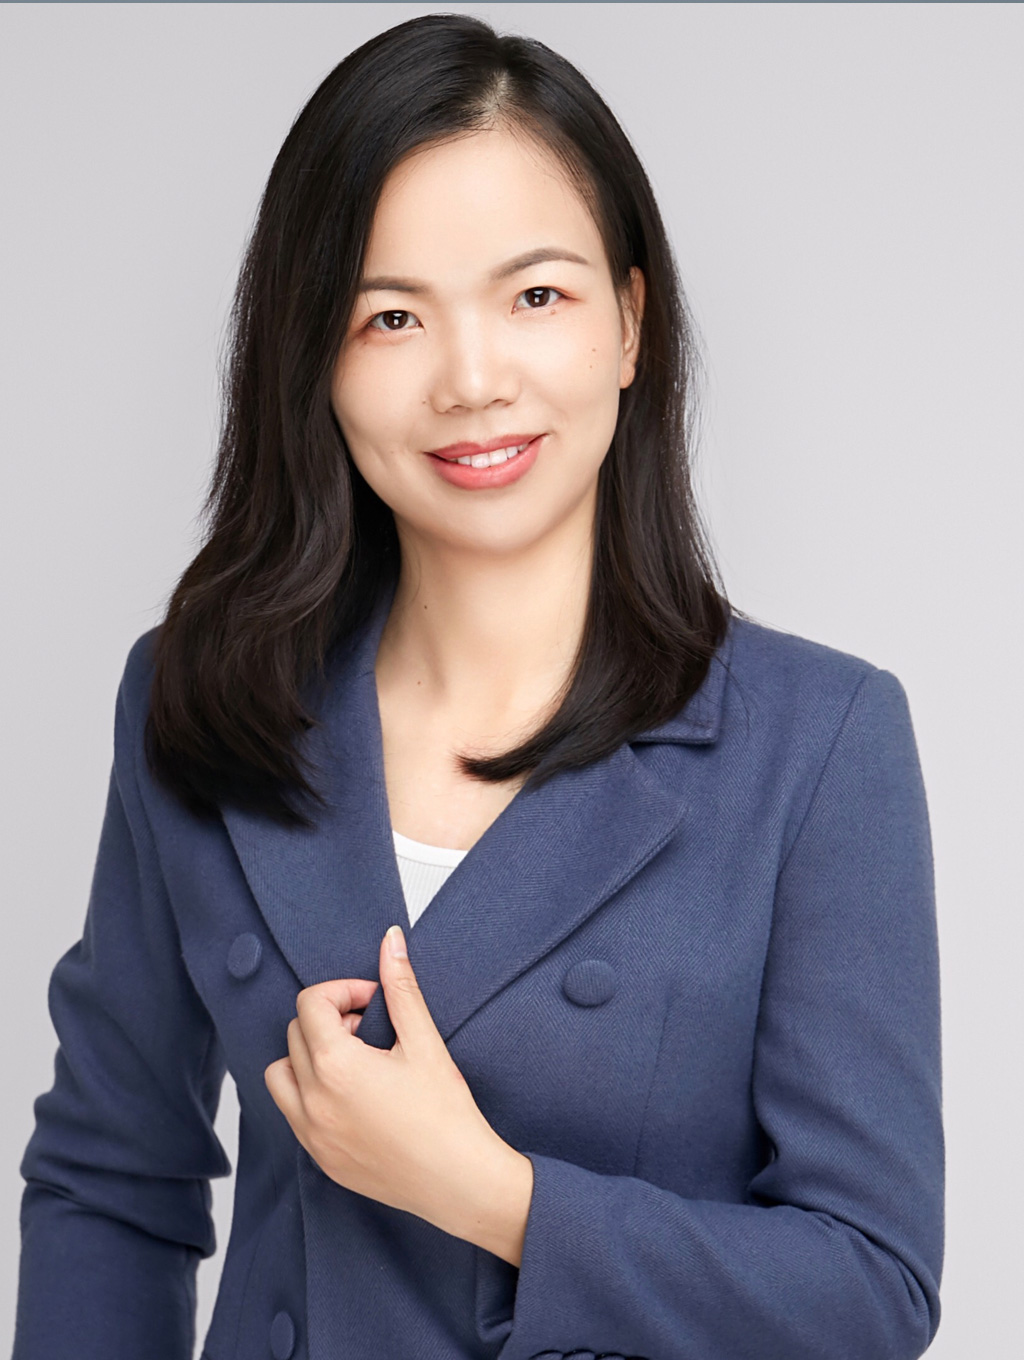 Yingbo Yang